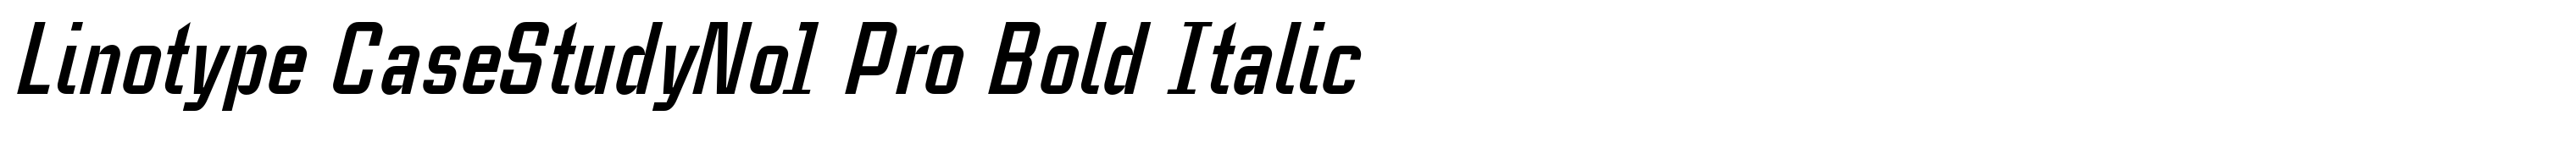 Linotype CaseStudyNo1 Pro Bold Italic